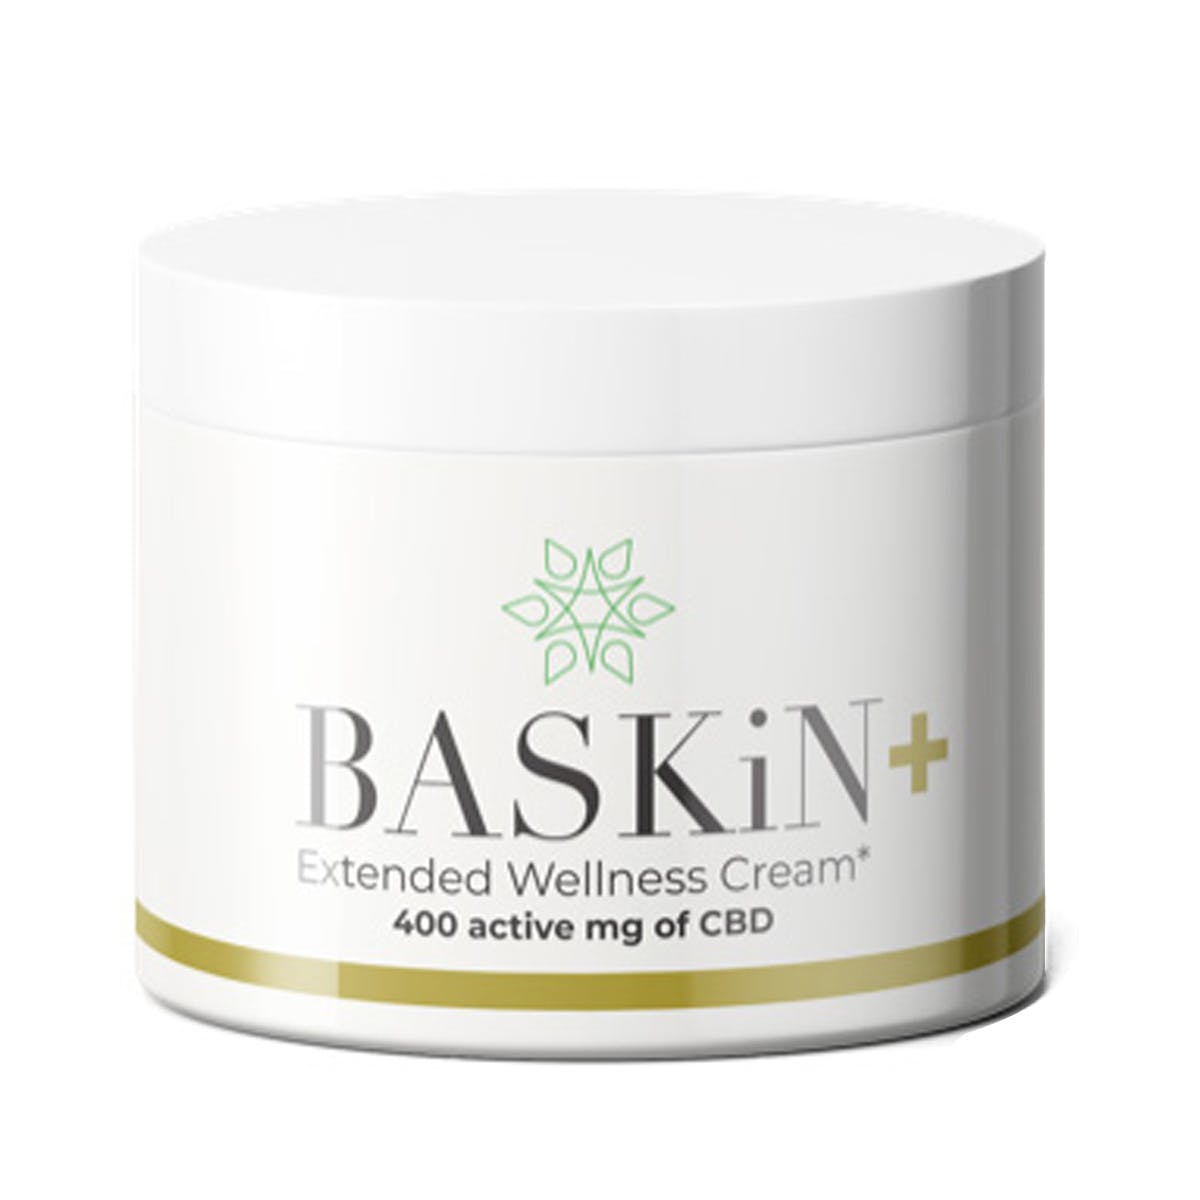 BaskiN+ Extended Wellness Cream – 400mg Active CBD